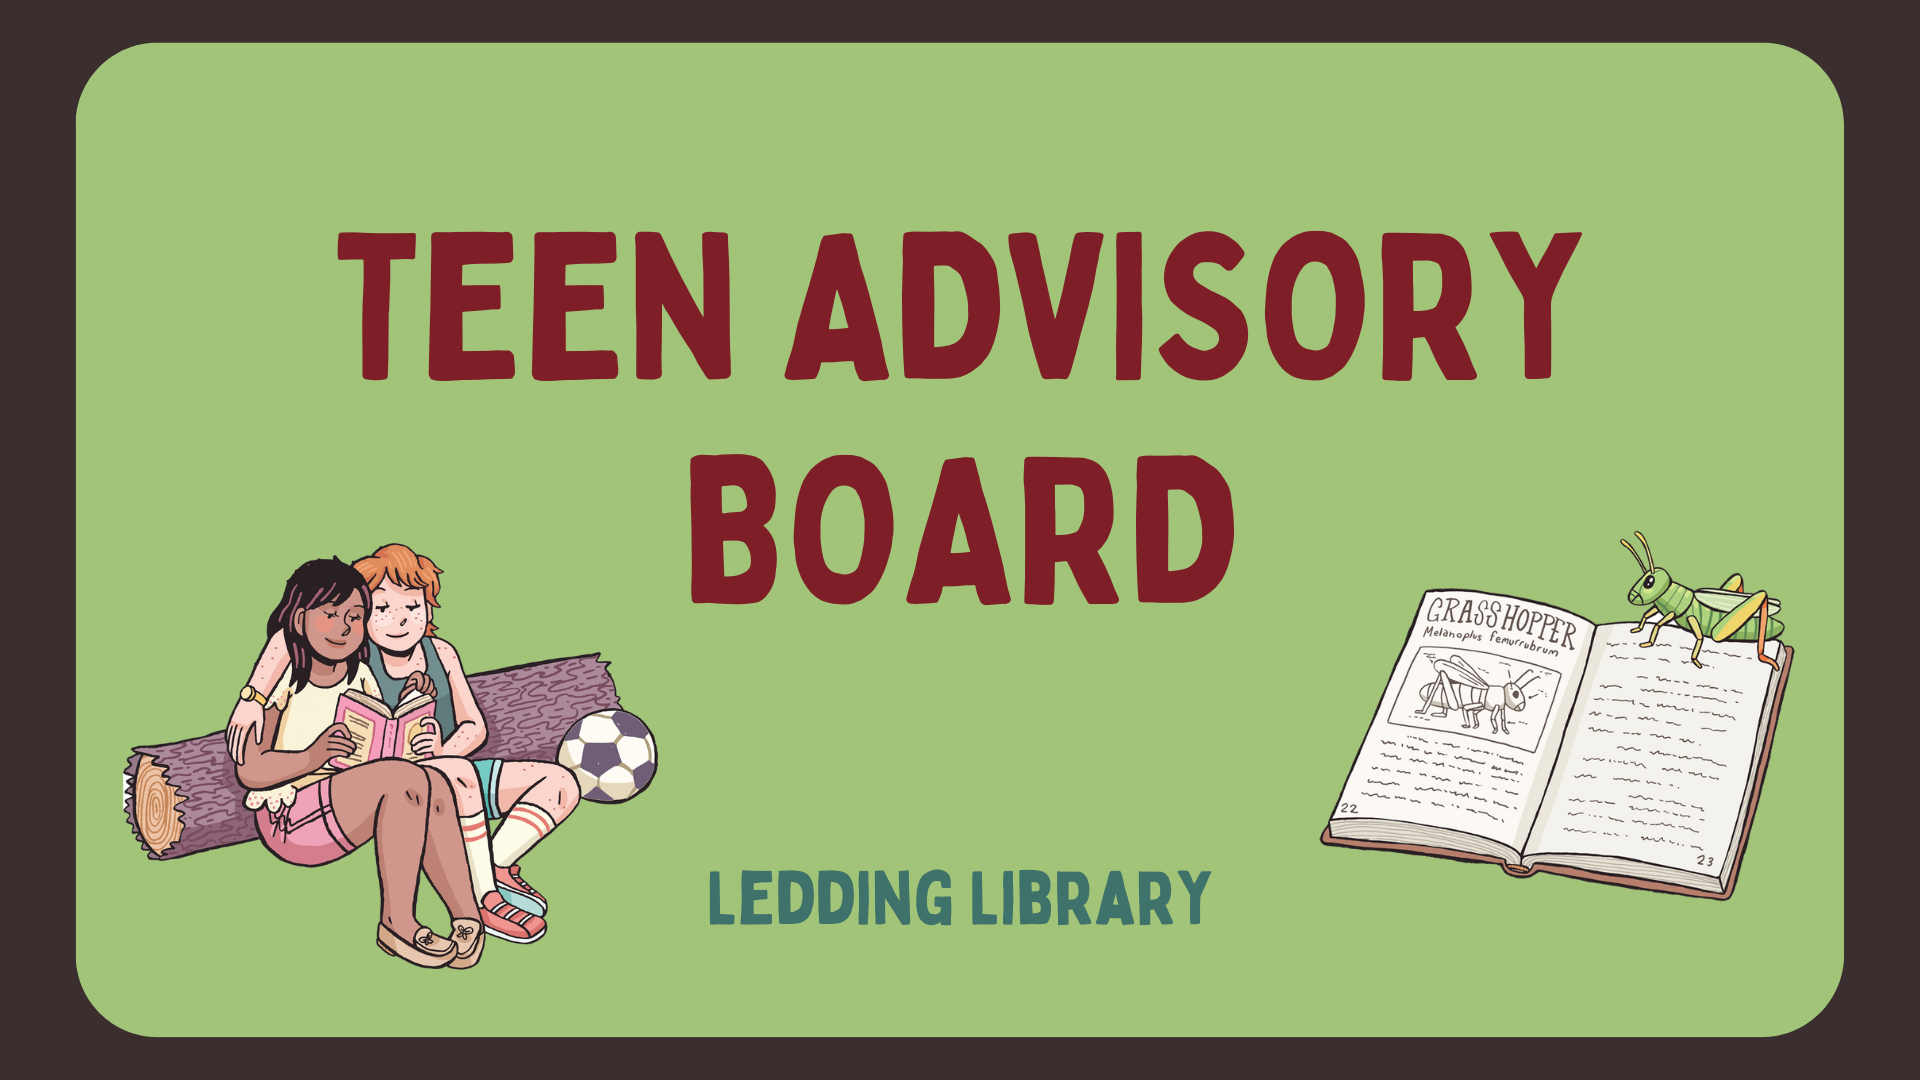 Teen Advisory Board Ledding Library